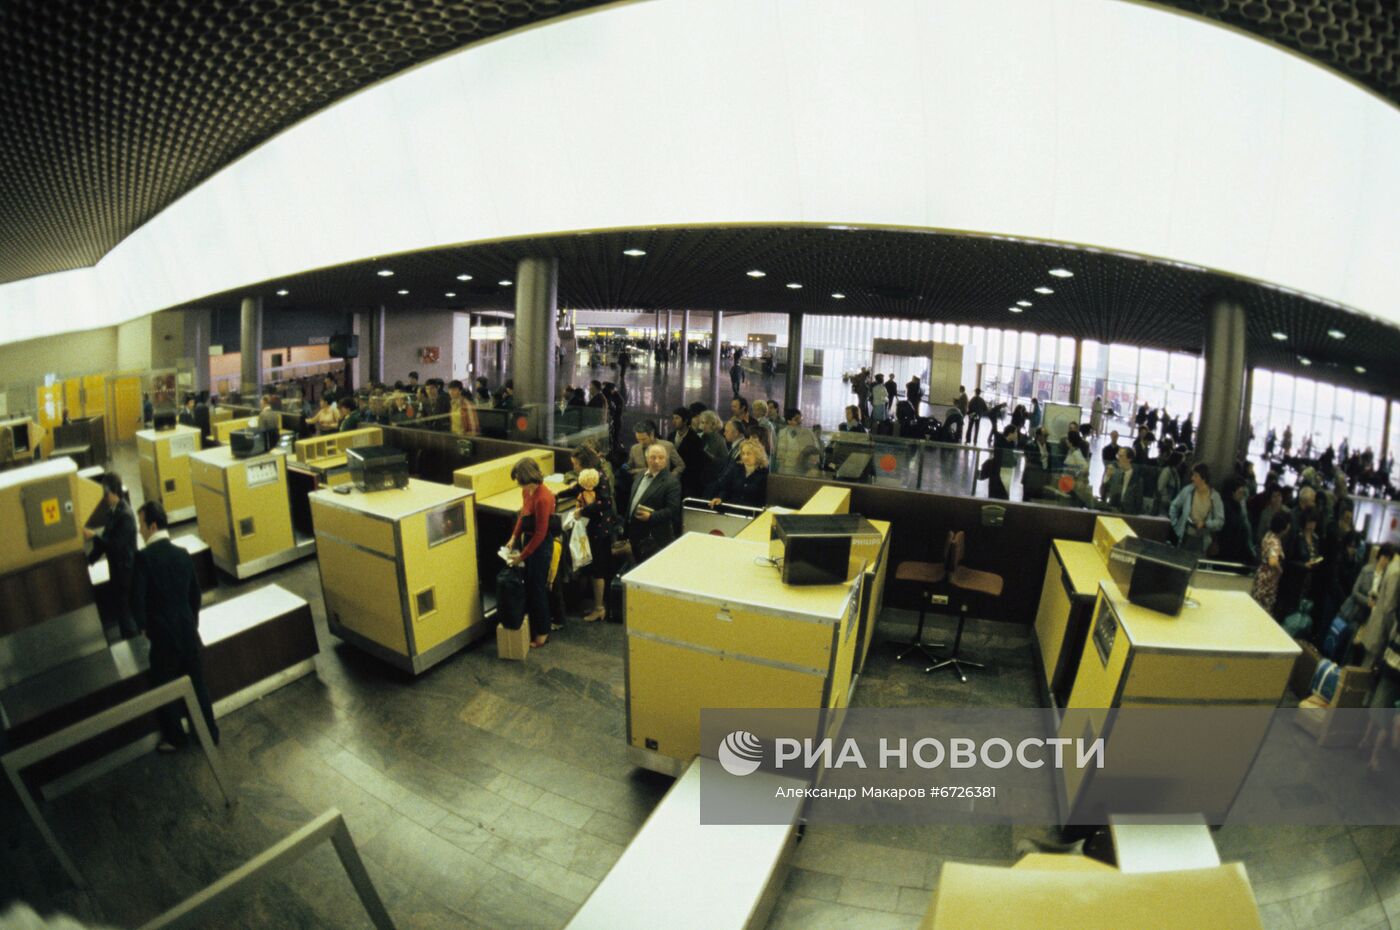 Таможенная служба международного аэропорта "Шереметьево"